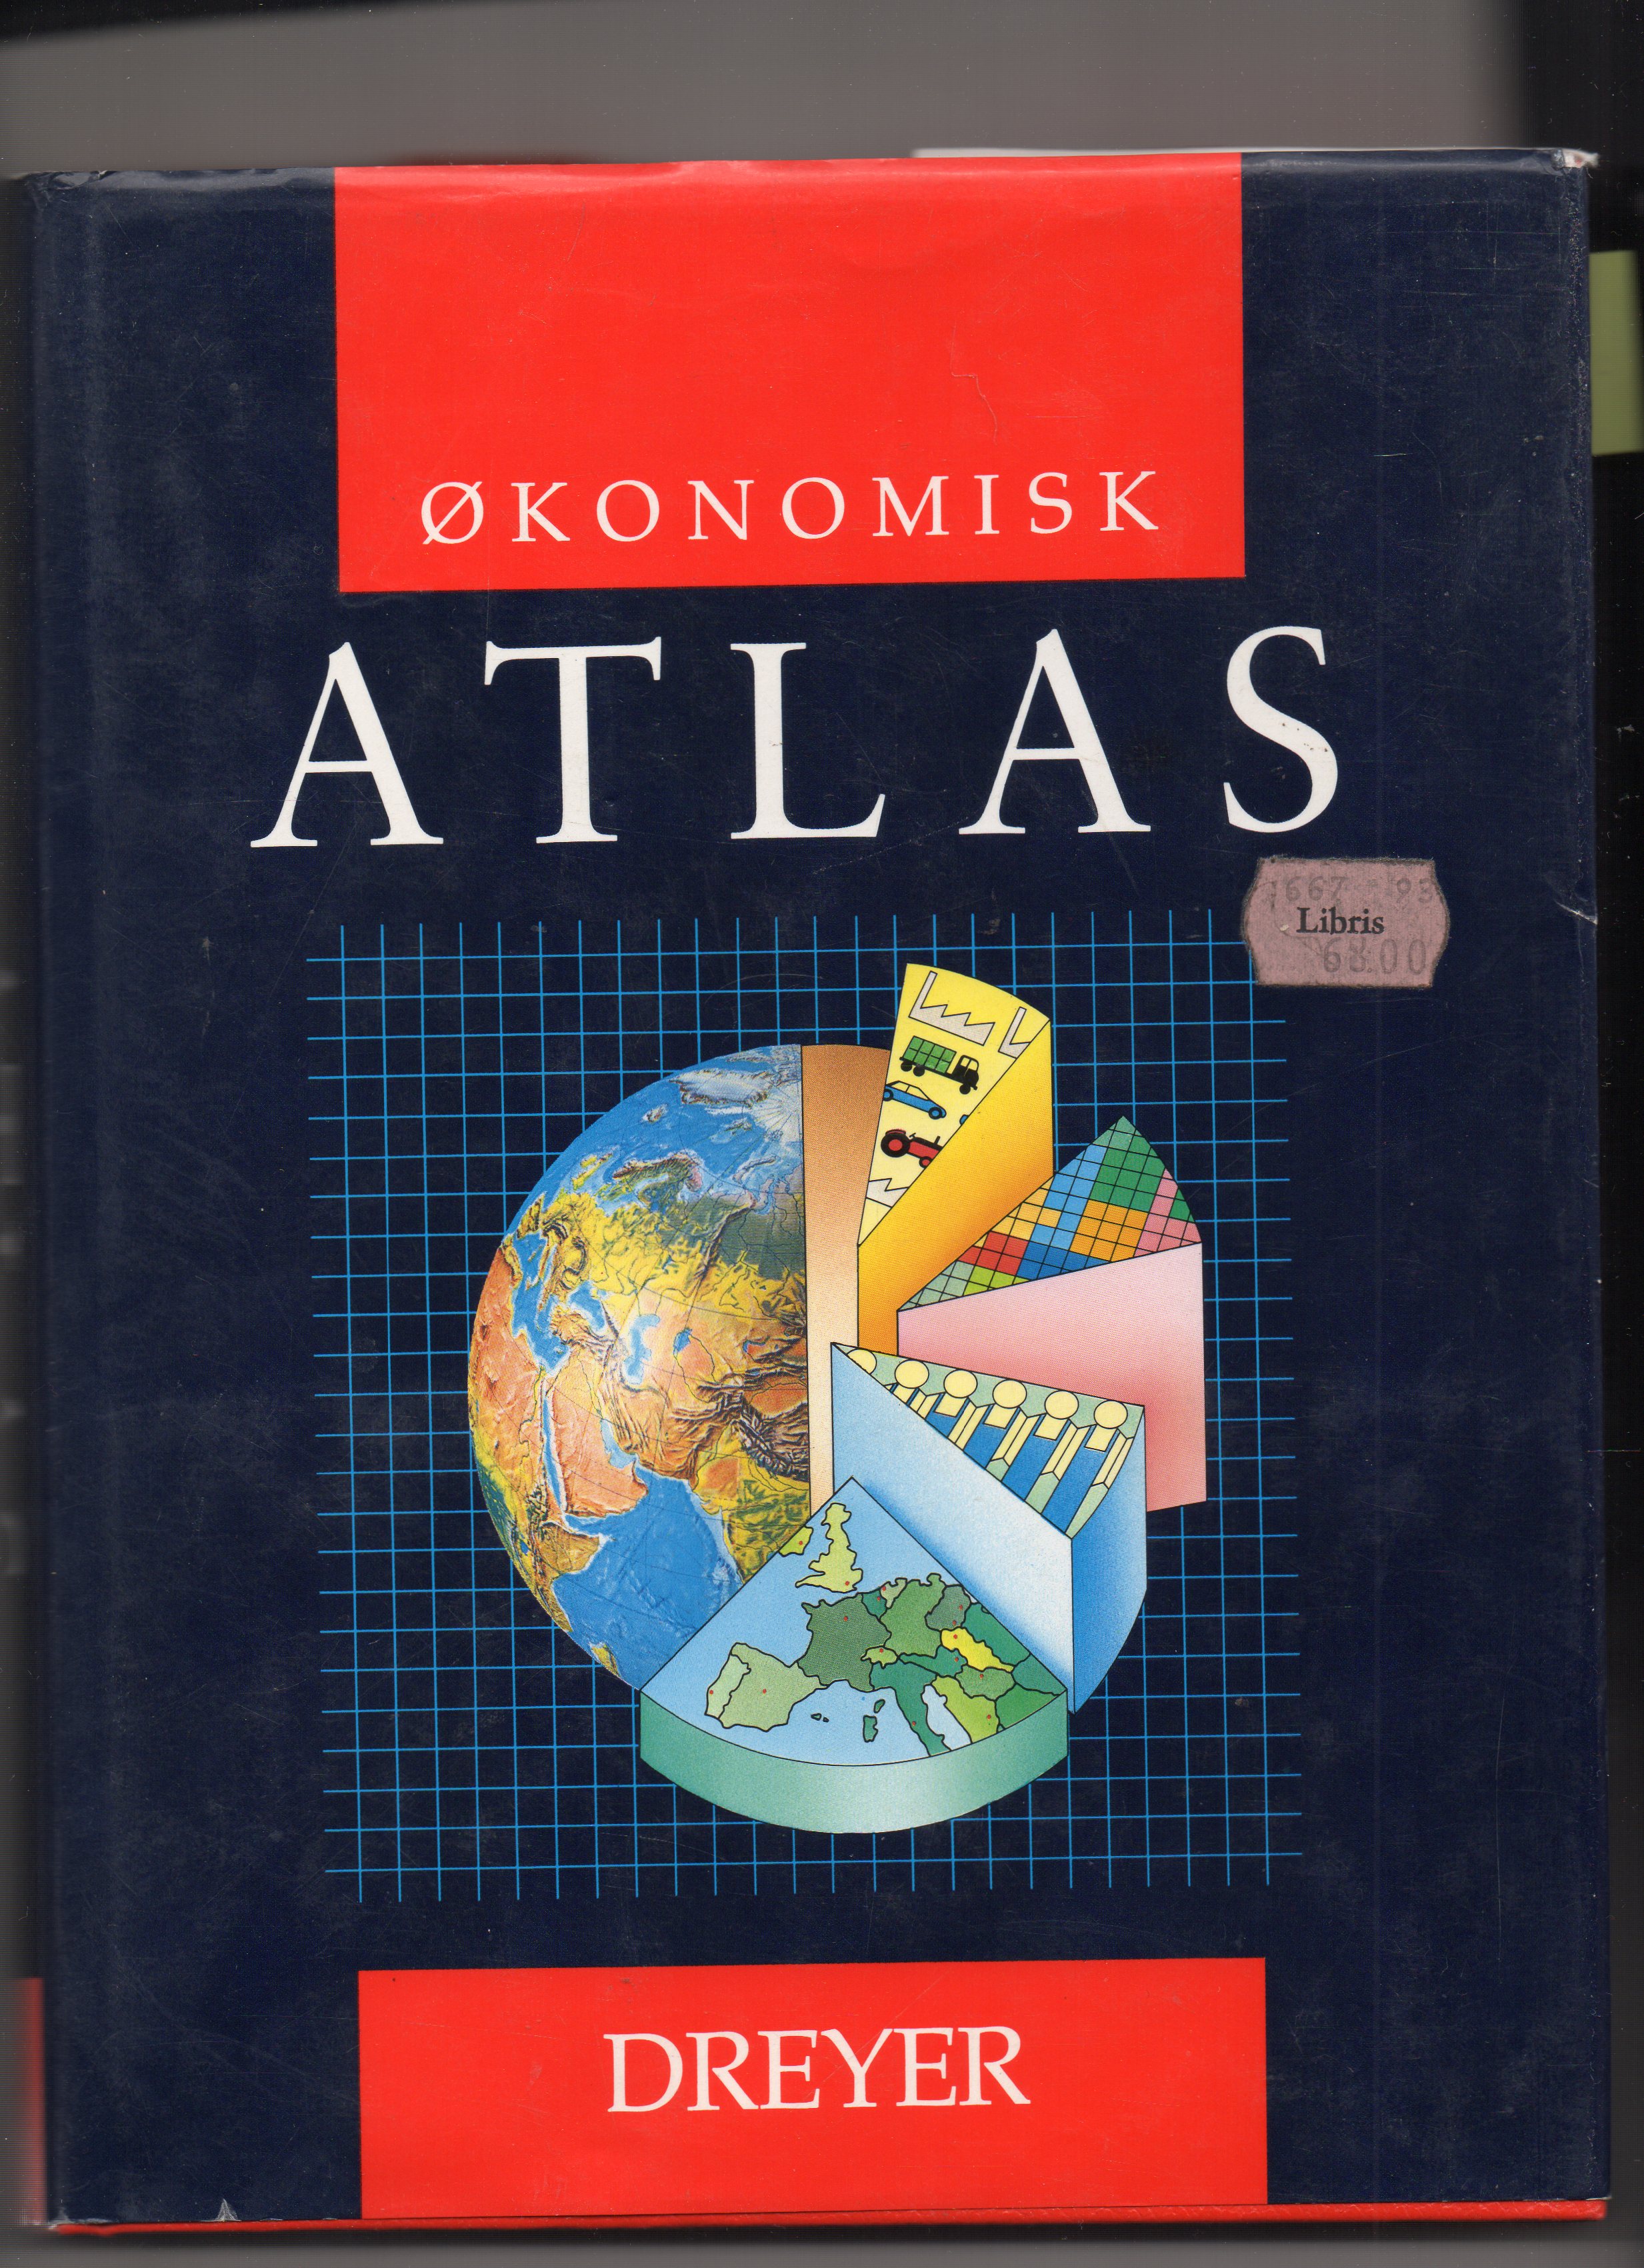 Økonomisk Atlas Dreyer smussbind  1 oppl 1989 pen